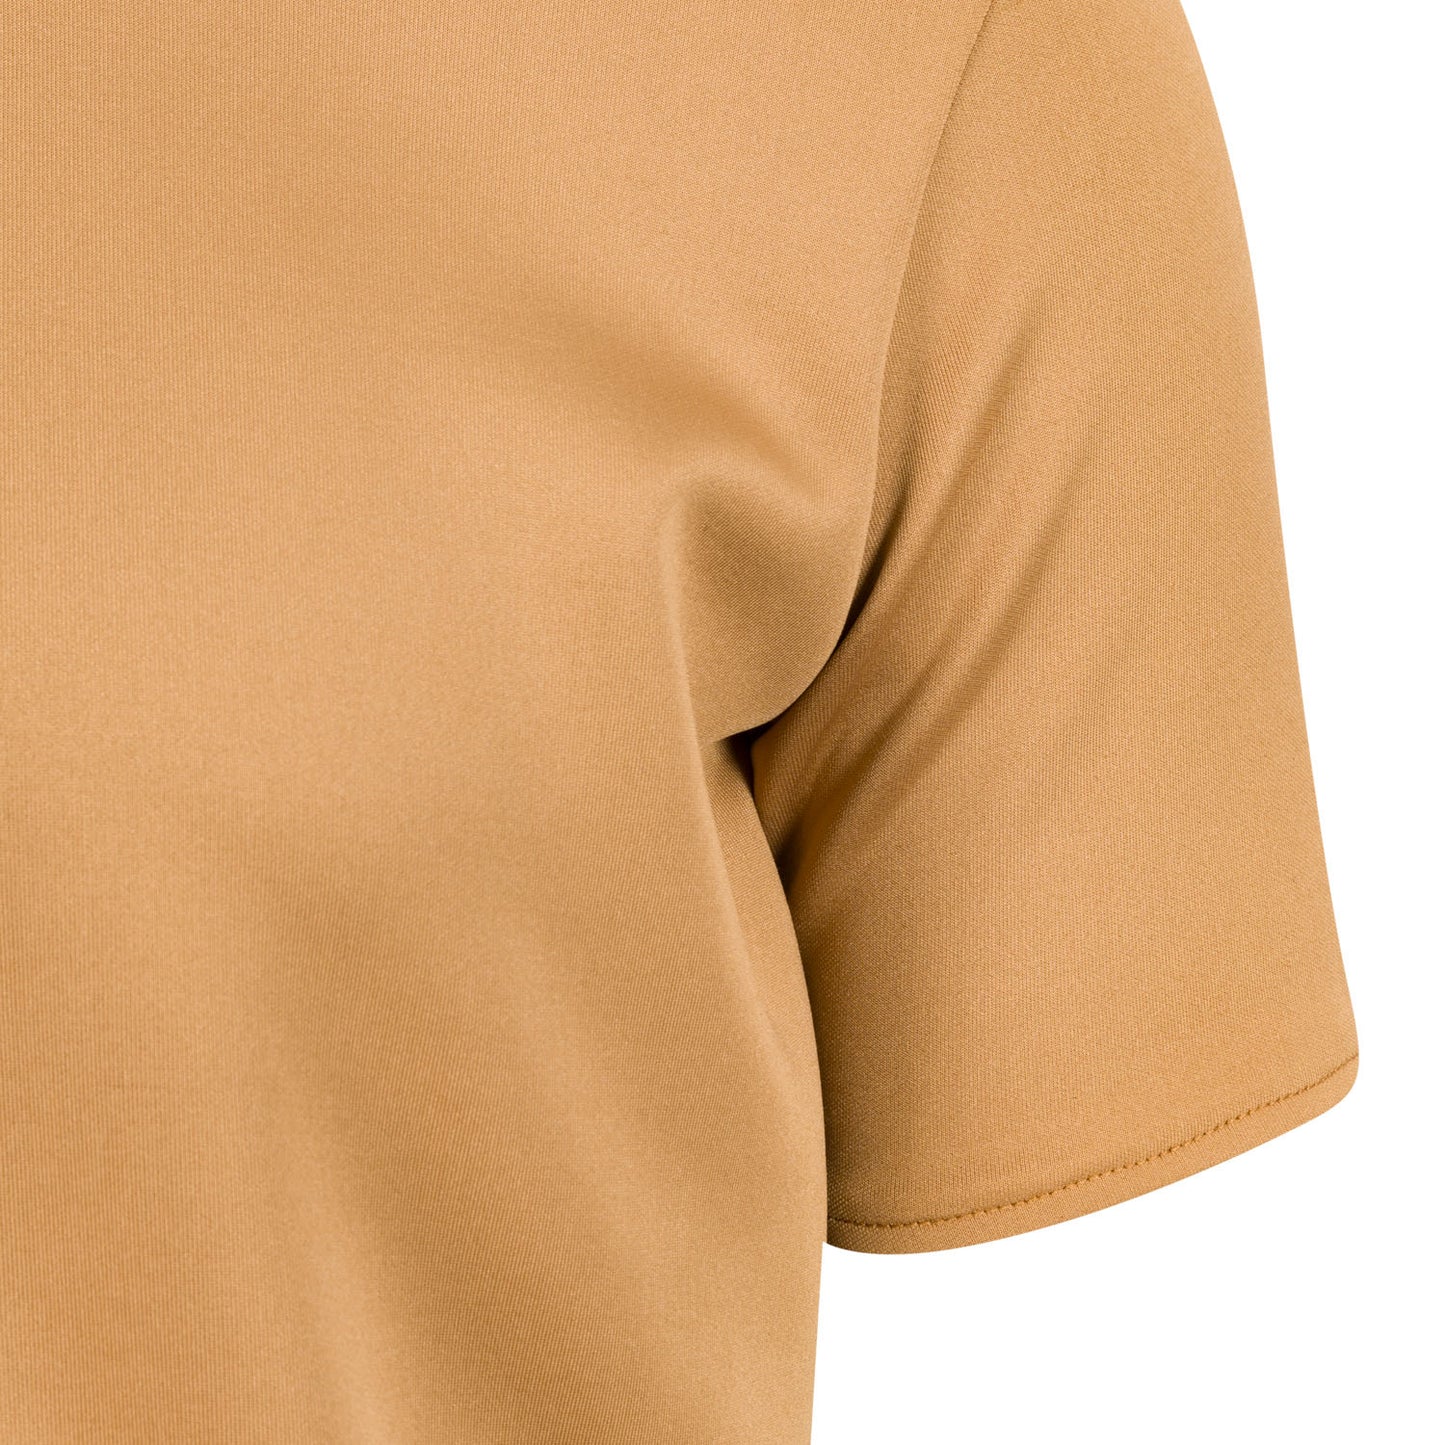 Brown Short Sleeved T-Shirt